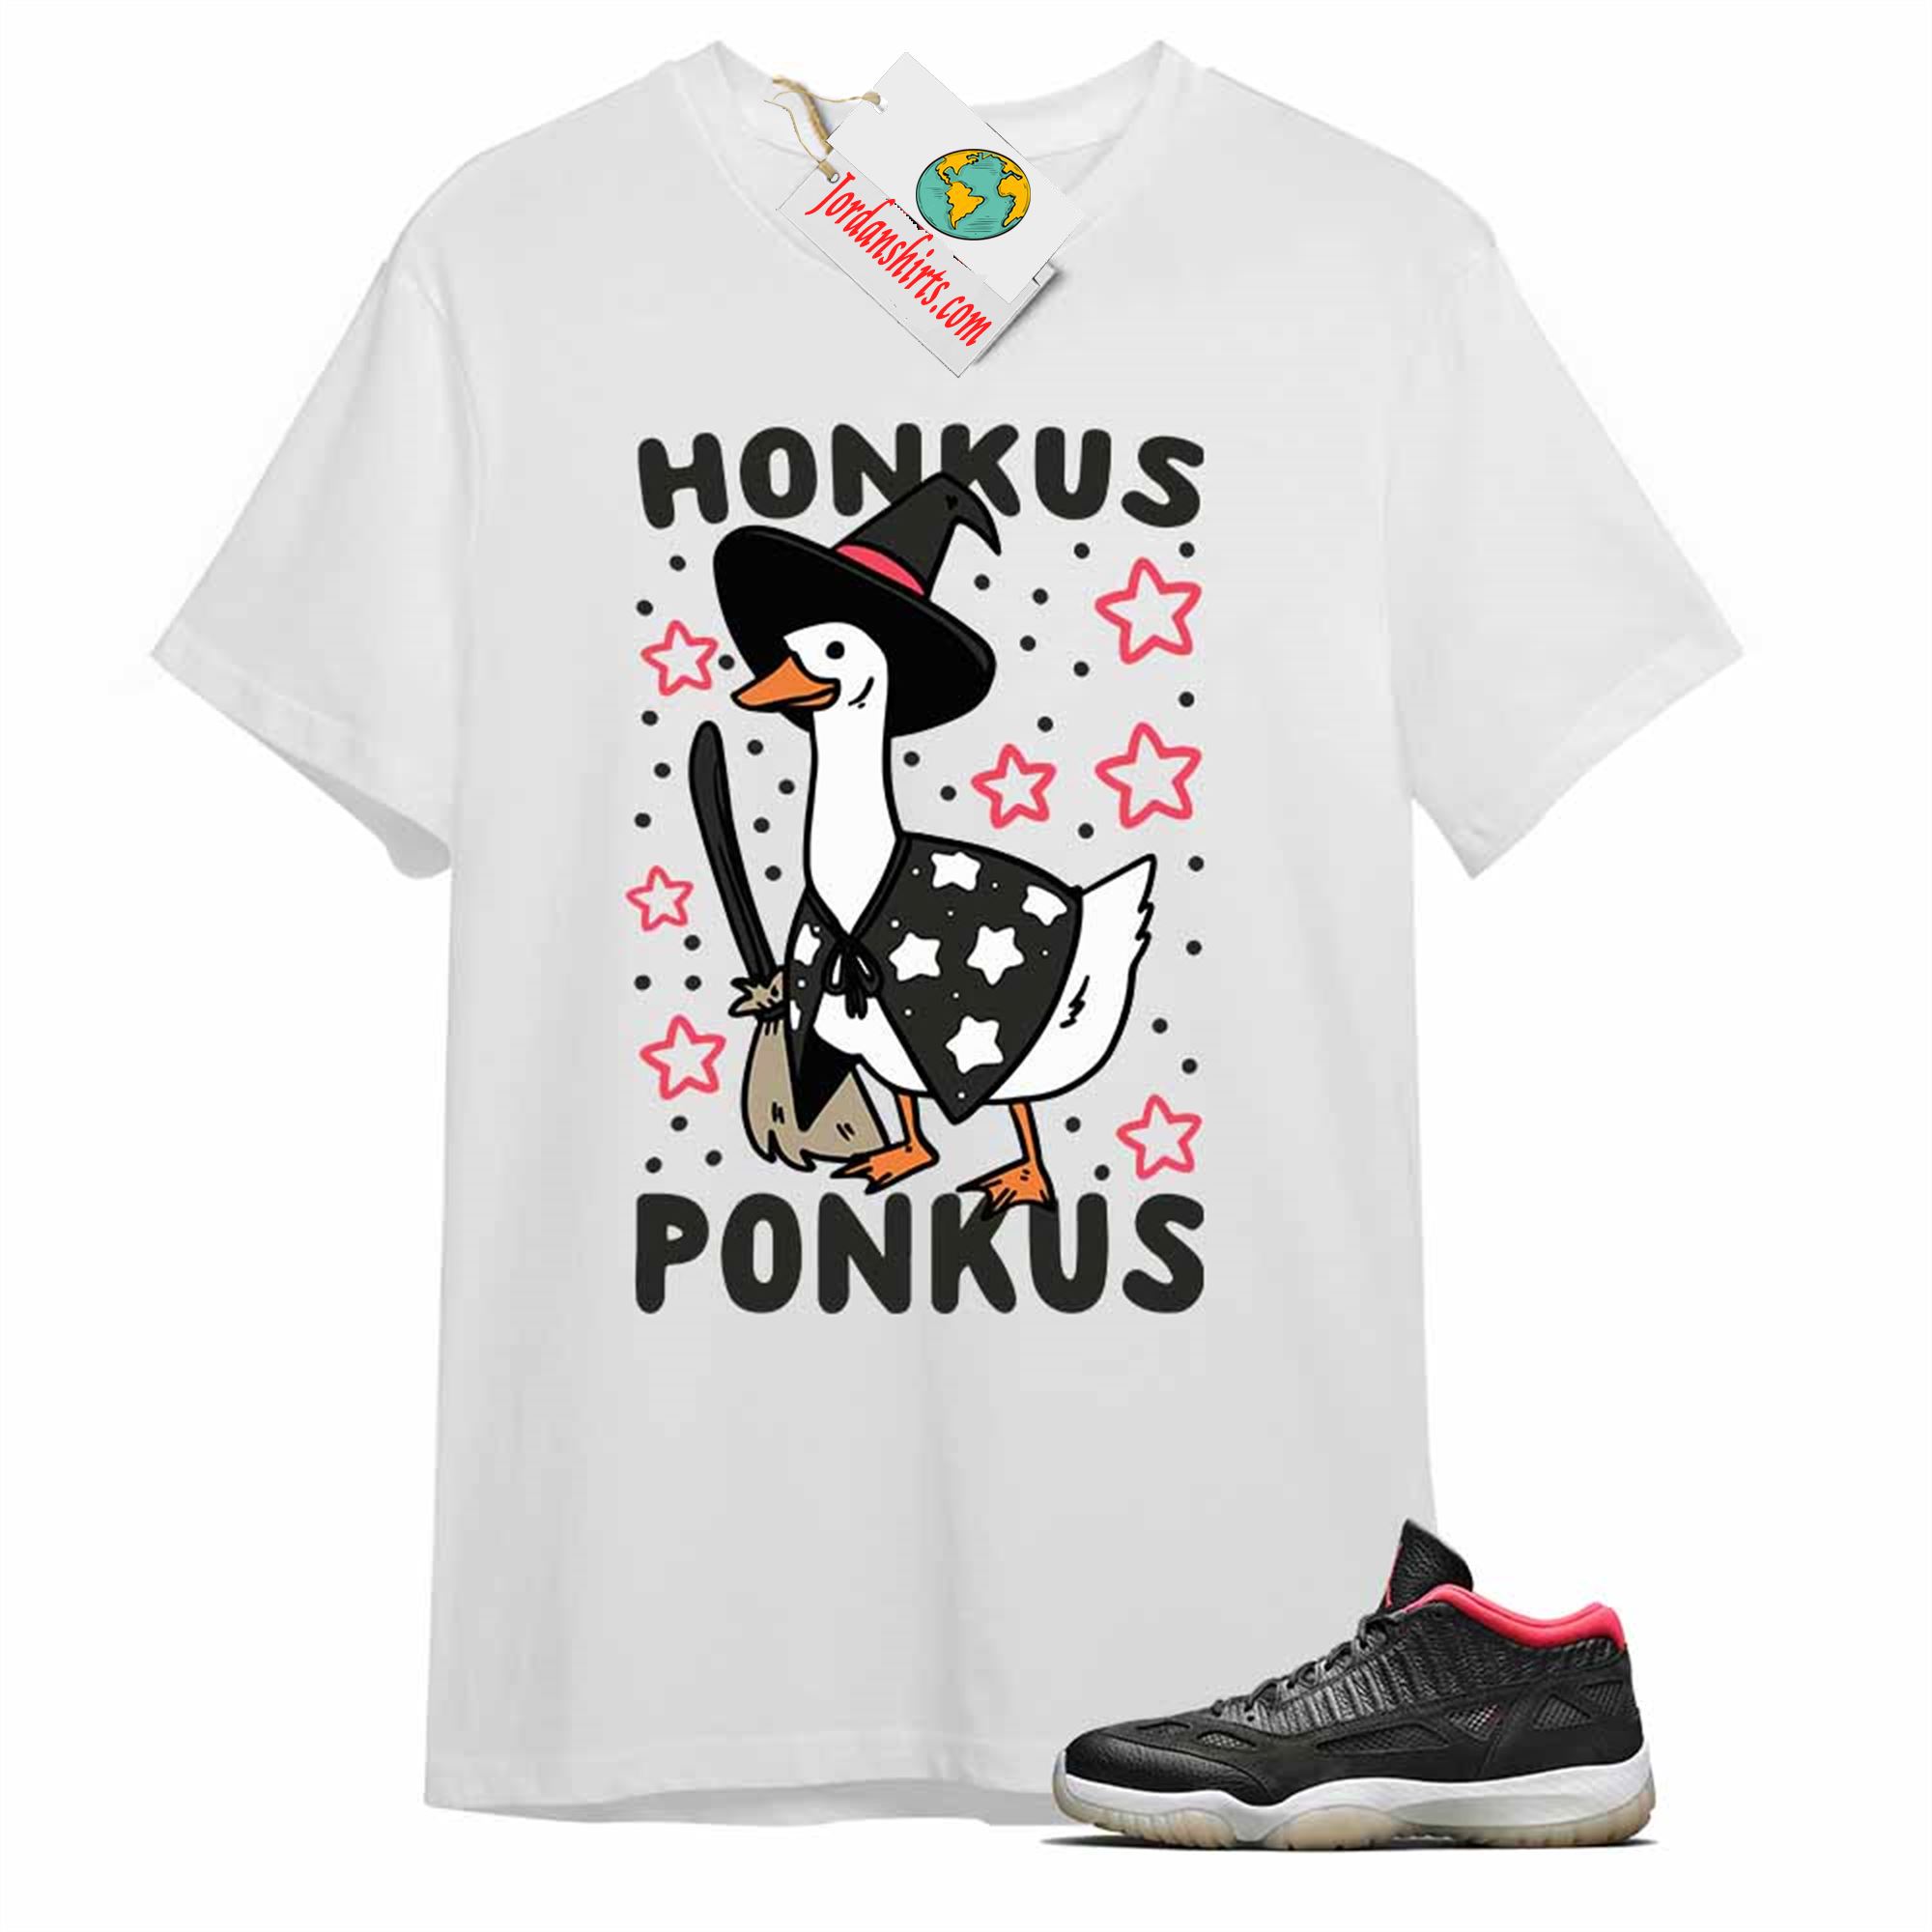 Jordan 11 Shirt, Witches Duck Honkus Ponkus White T-shirt Air Jordan 11 Bred 11s Plus Size Up To 5xl